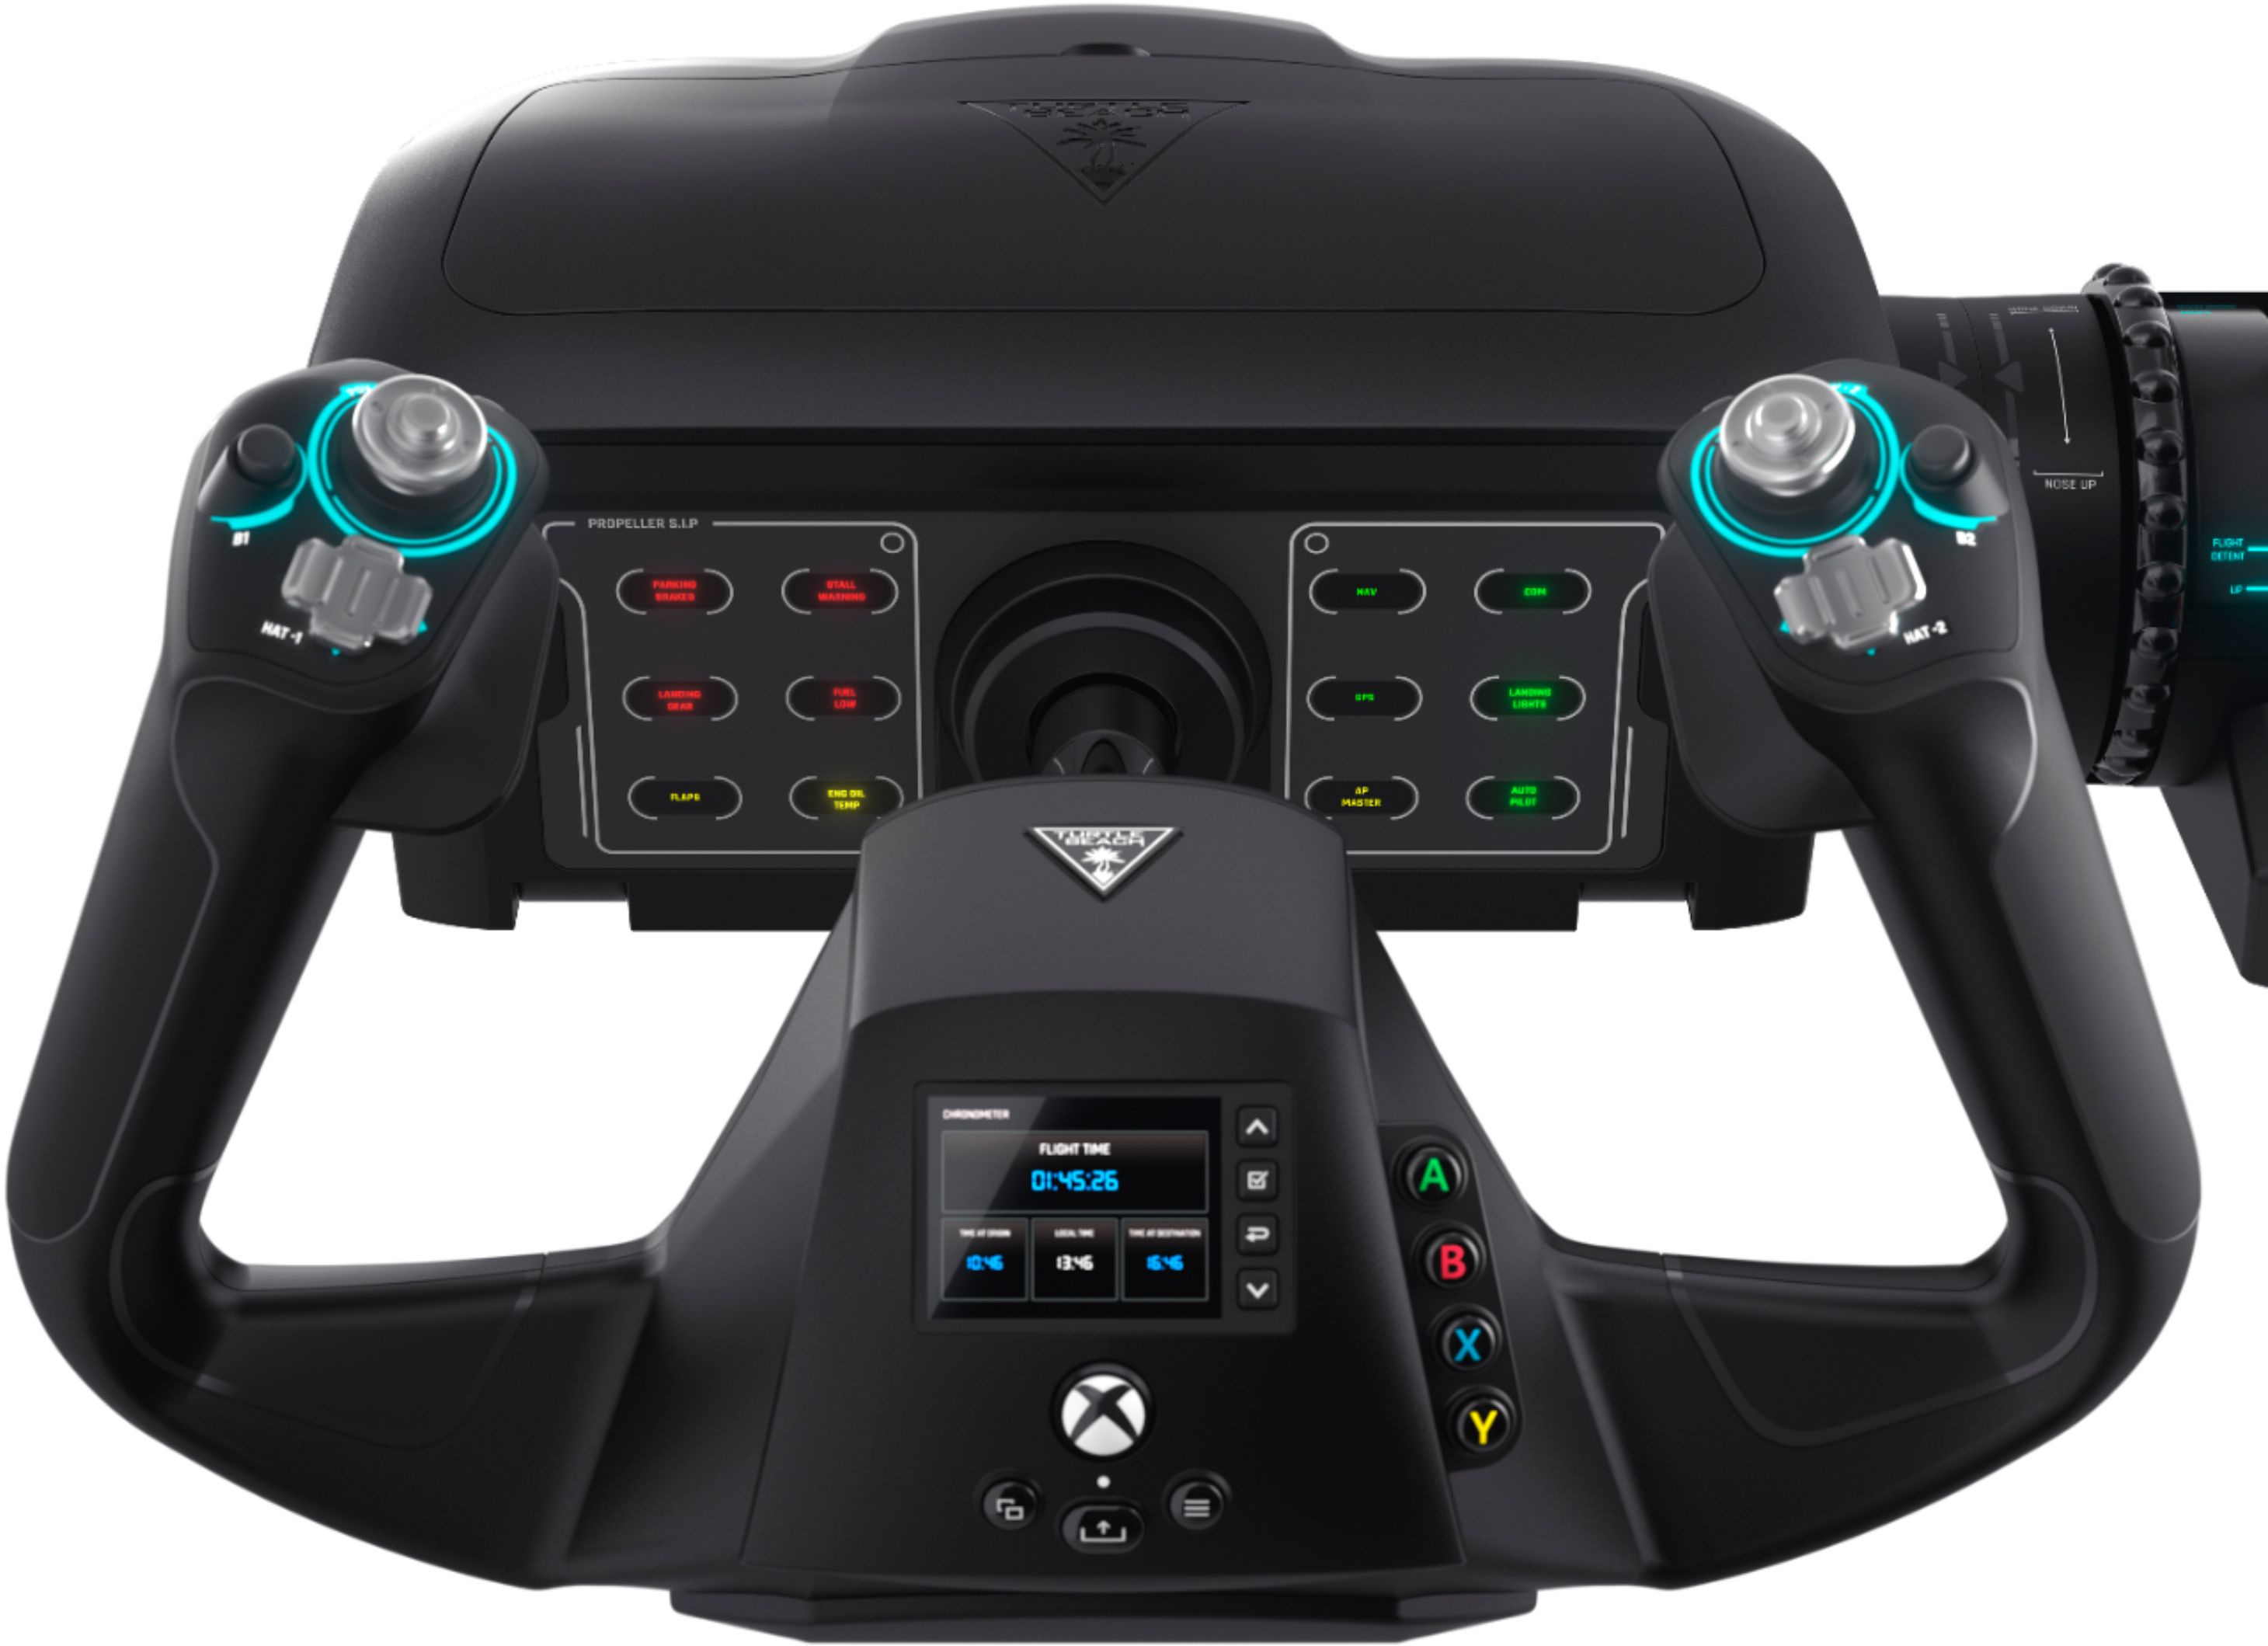 Turtle Beach VelocityOne Flightstick Universal Simulation Controller  Joystick for Air & Space Combat Simulation – Xbox Series X, Xbox Series S,  Xbox